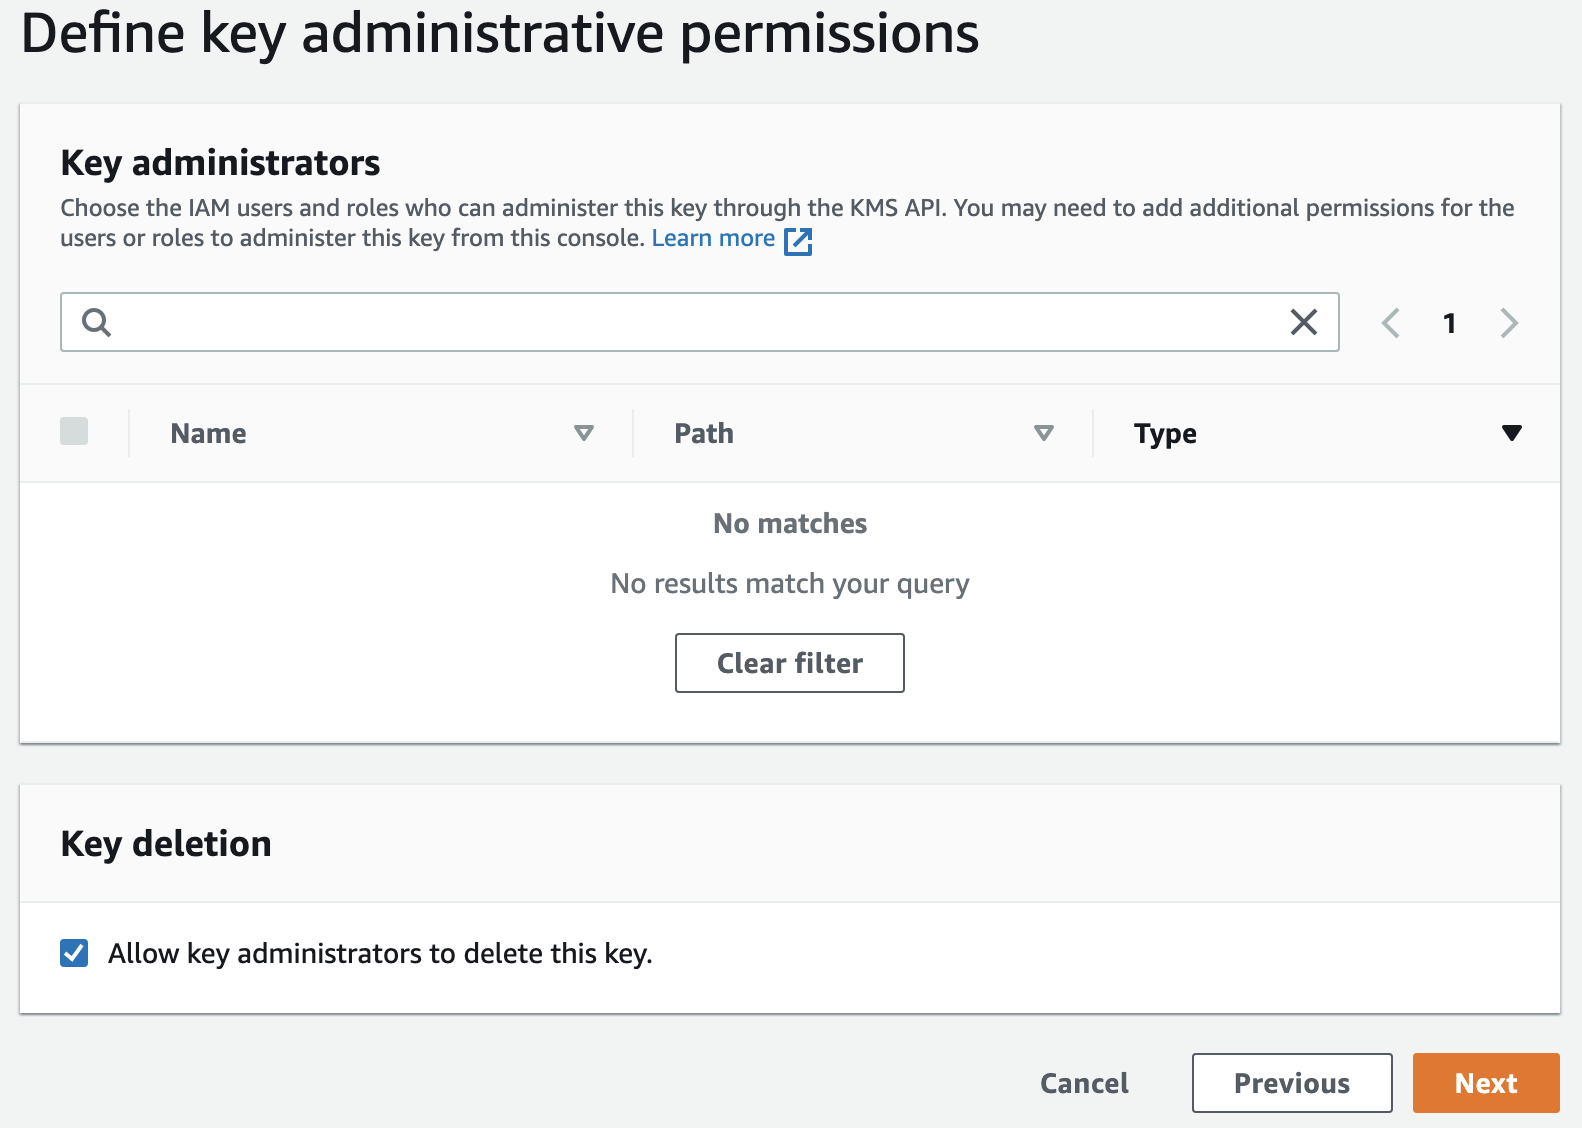 aws-step-3-define-key-administrative-permissions.png